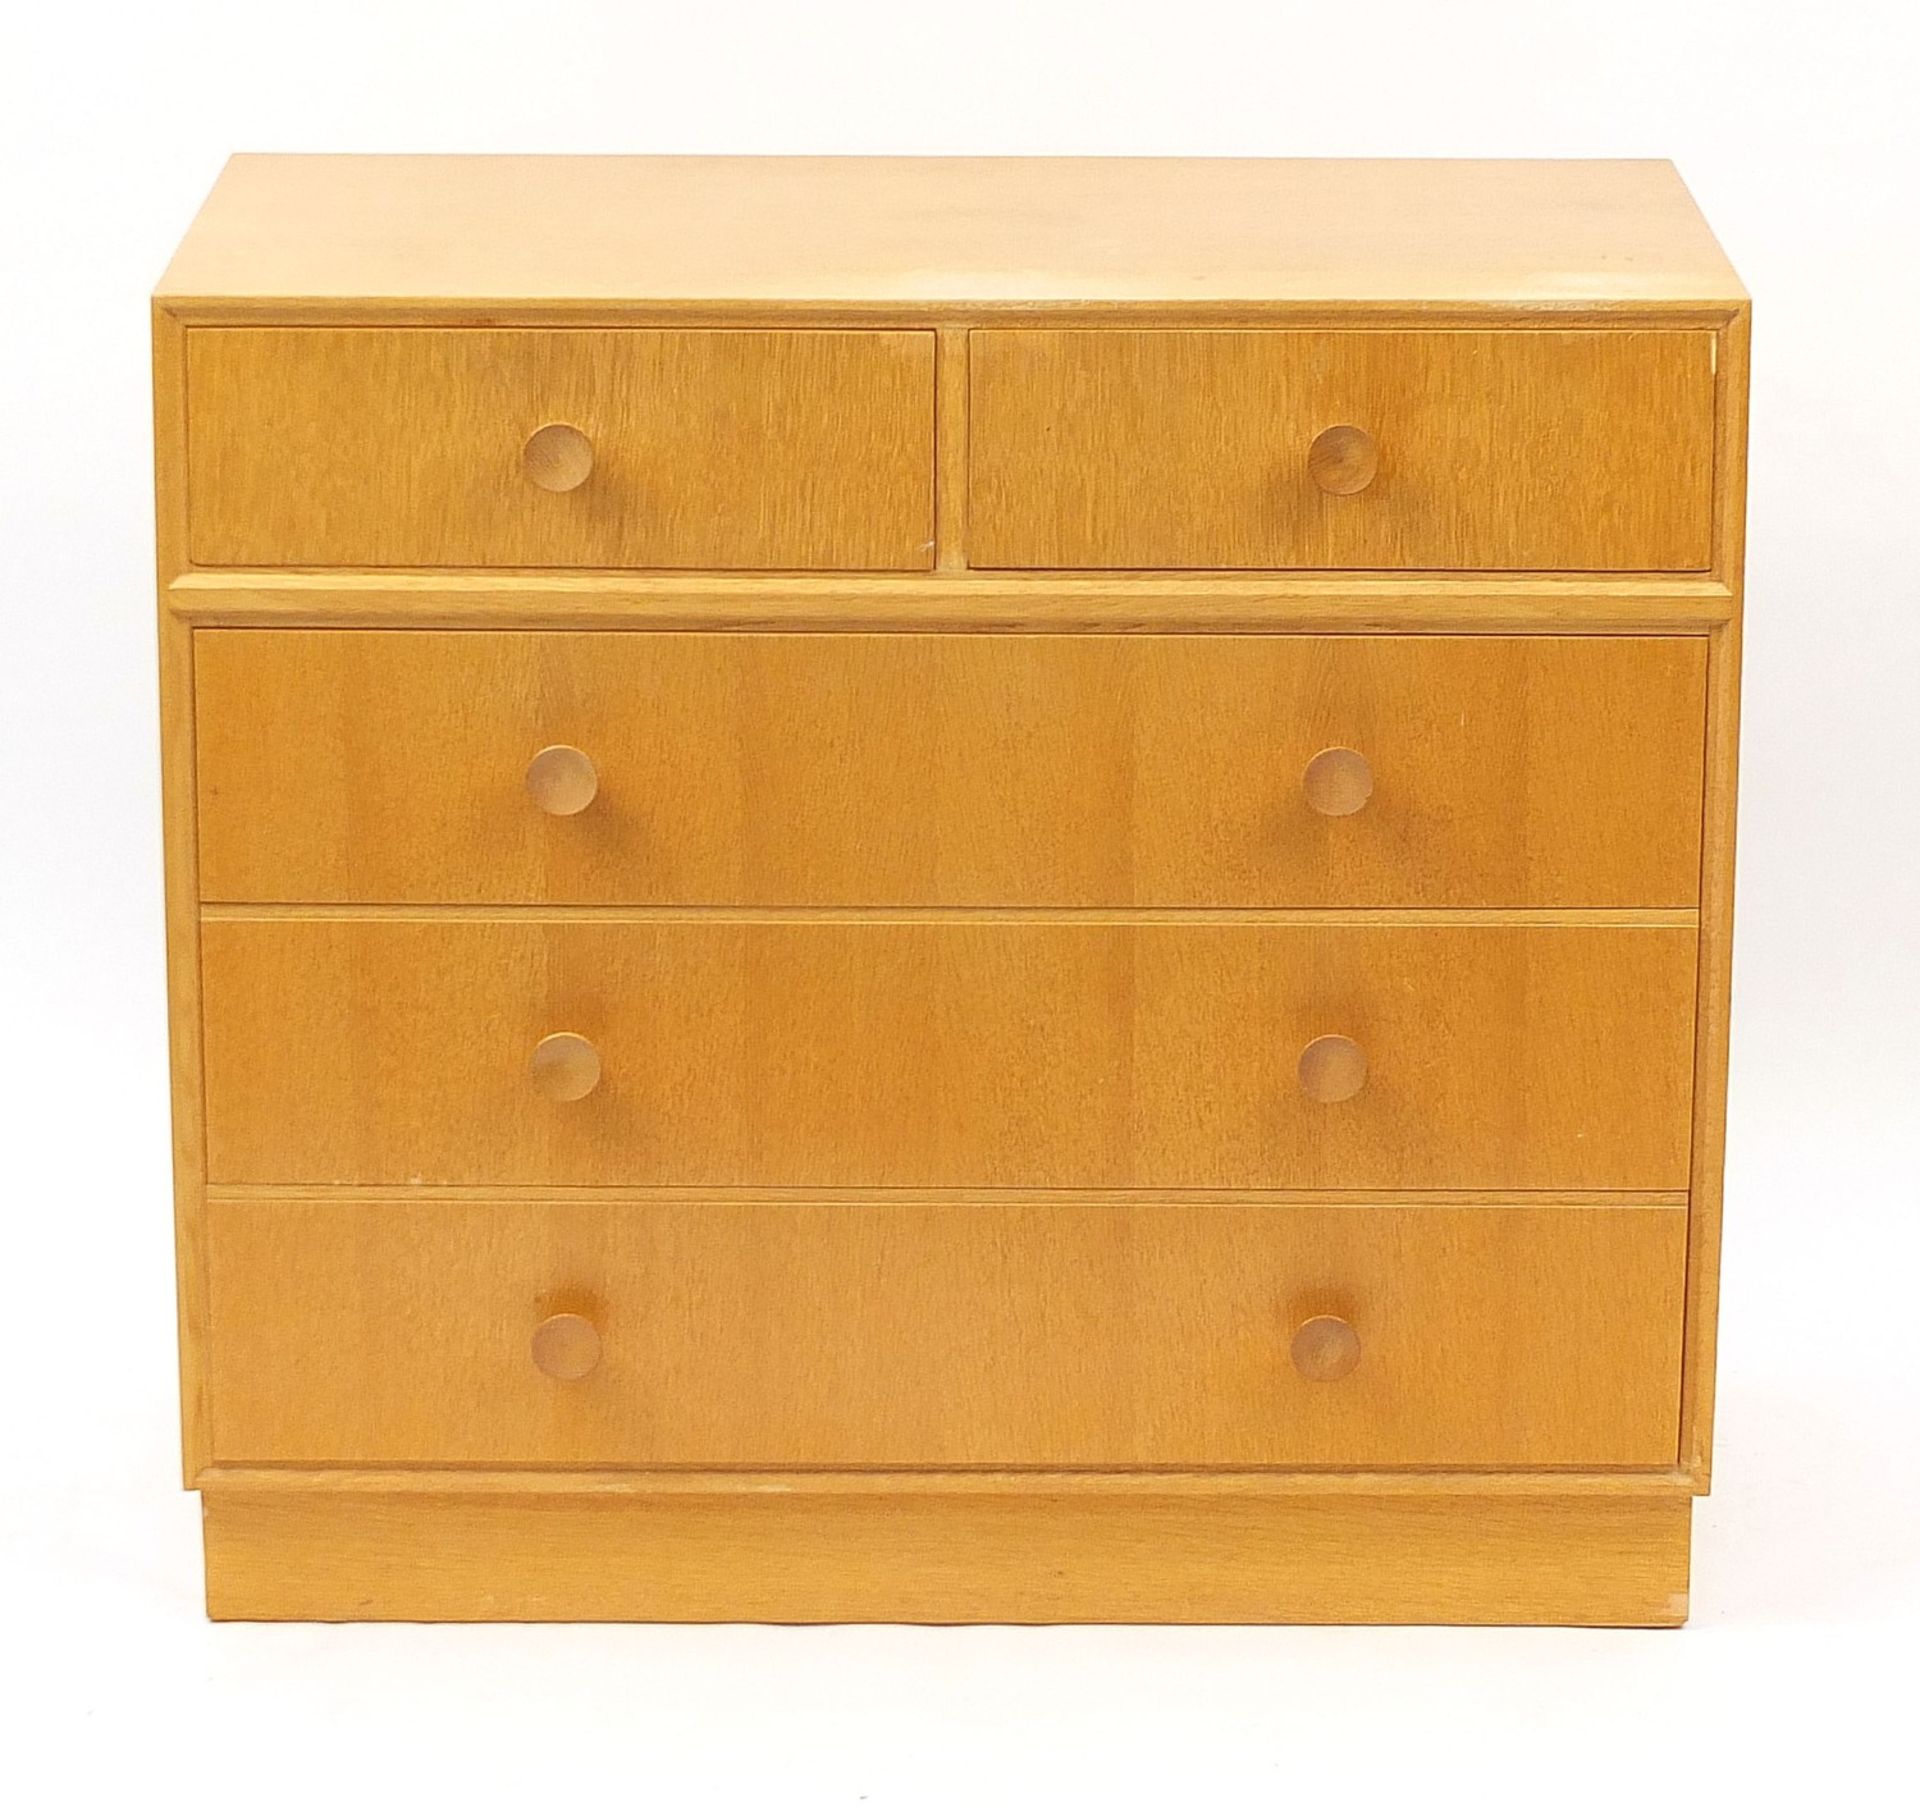 Meredew, 1970's teak five drawer chest, 82cm H x 91.5cm W x 46cm D - Image 2 of 5